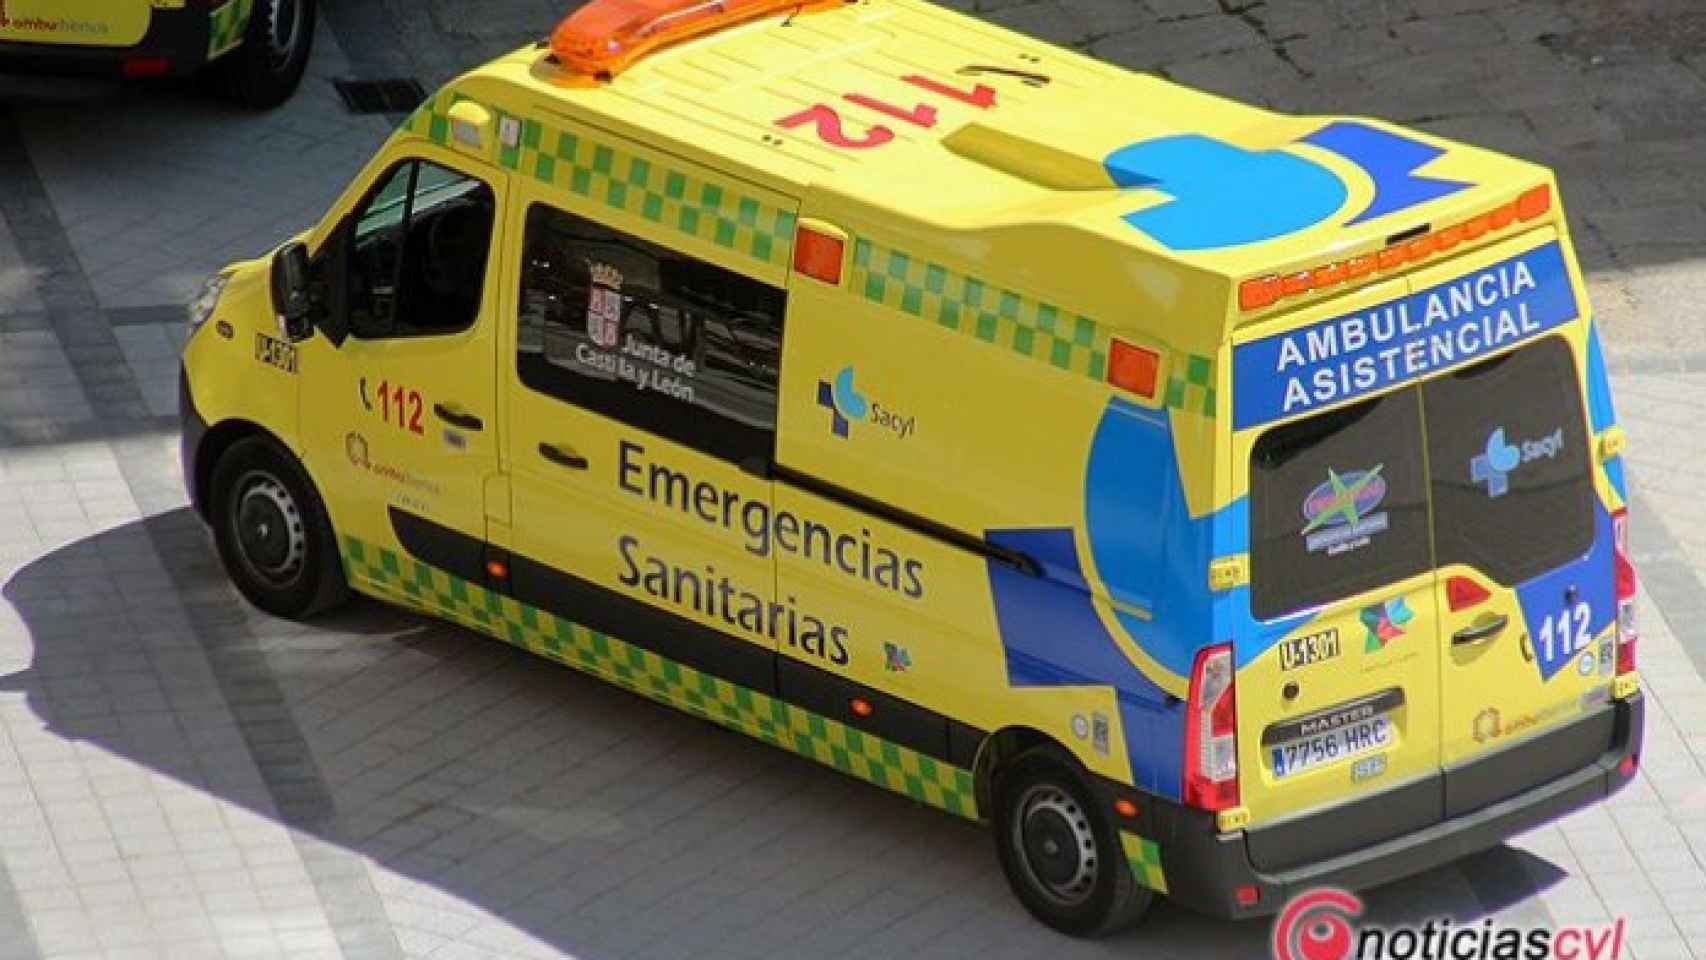 ambulancia medicalizada